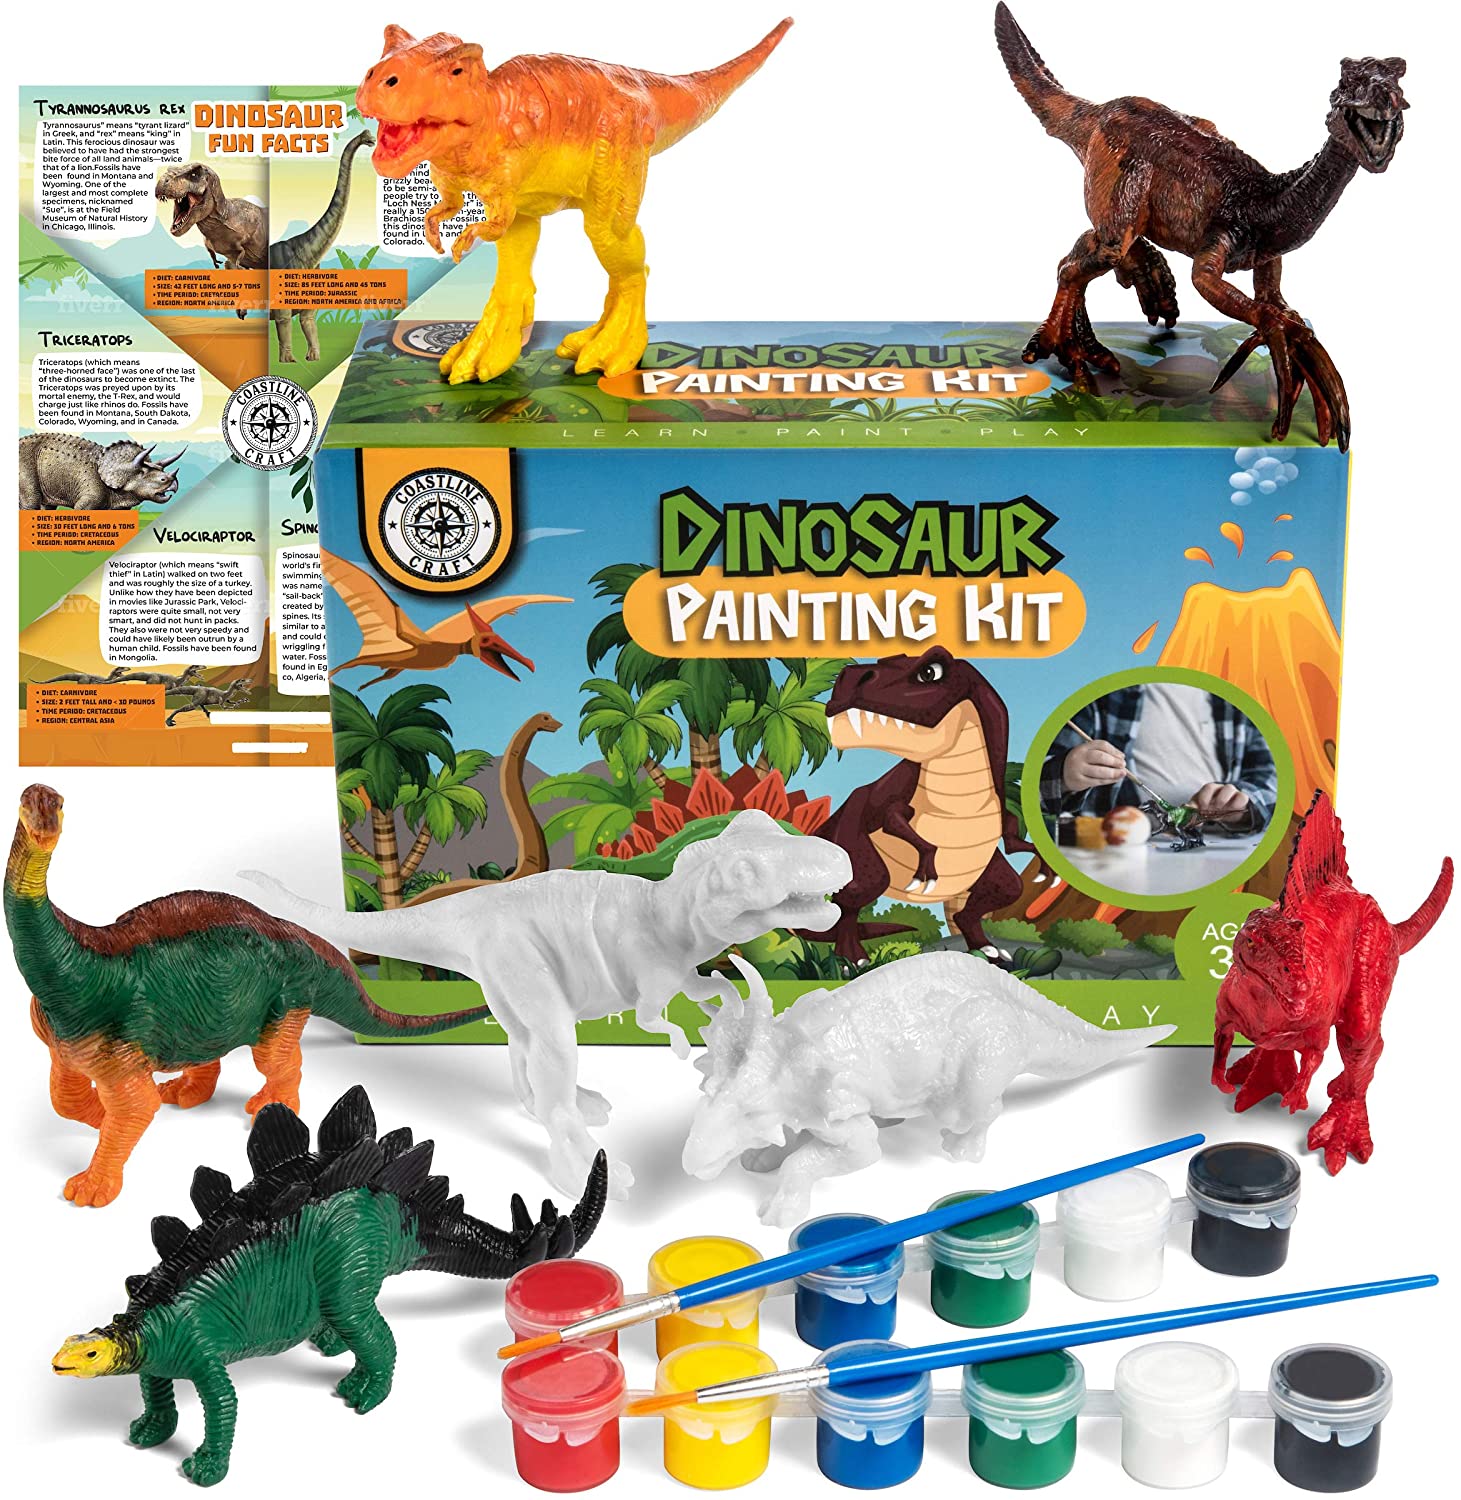 COASTLINE CRAFT Plastic Dinosaur Models Painting Kit Dinosaur Gifts For Boys